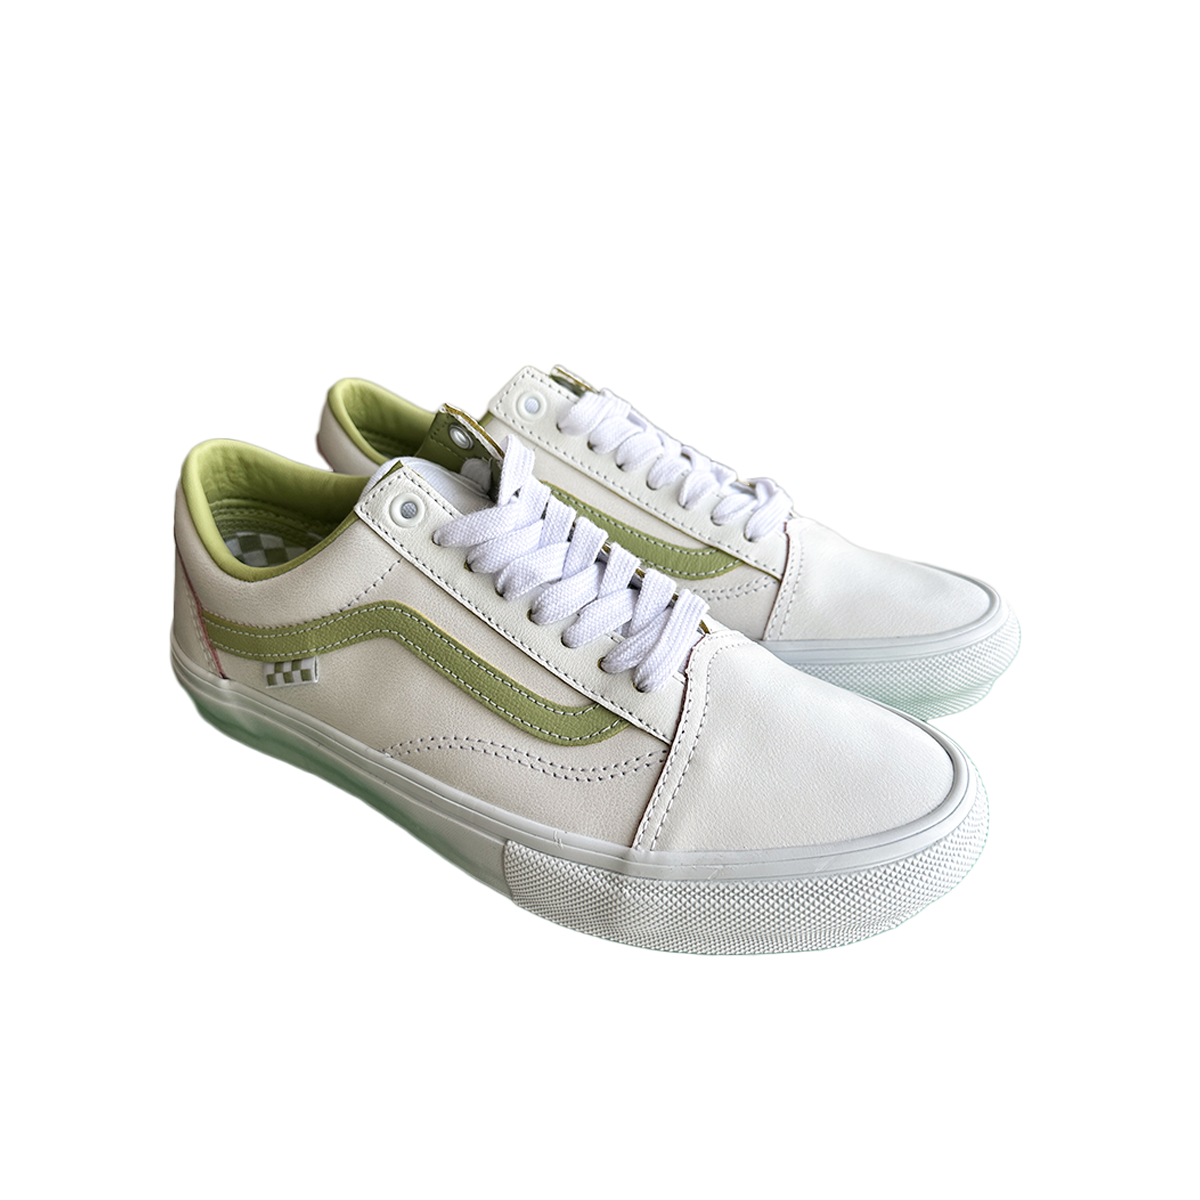 Vans Skate Old Skool Shoe - Wear Away Mint / White